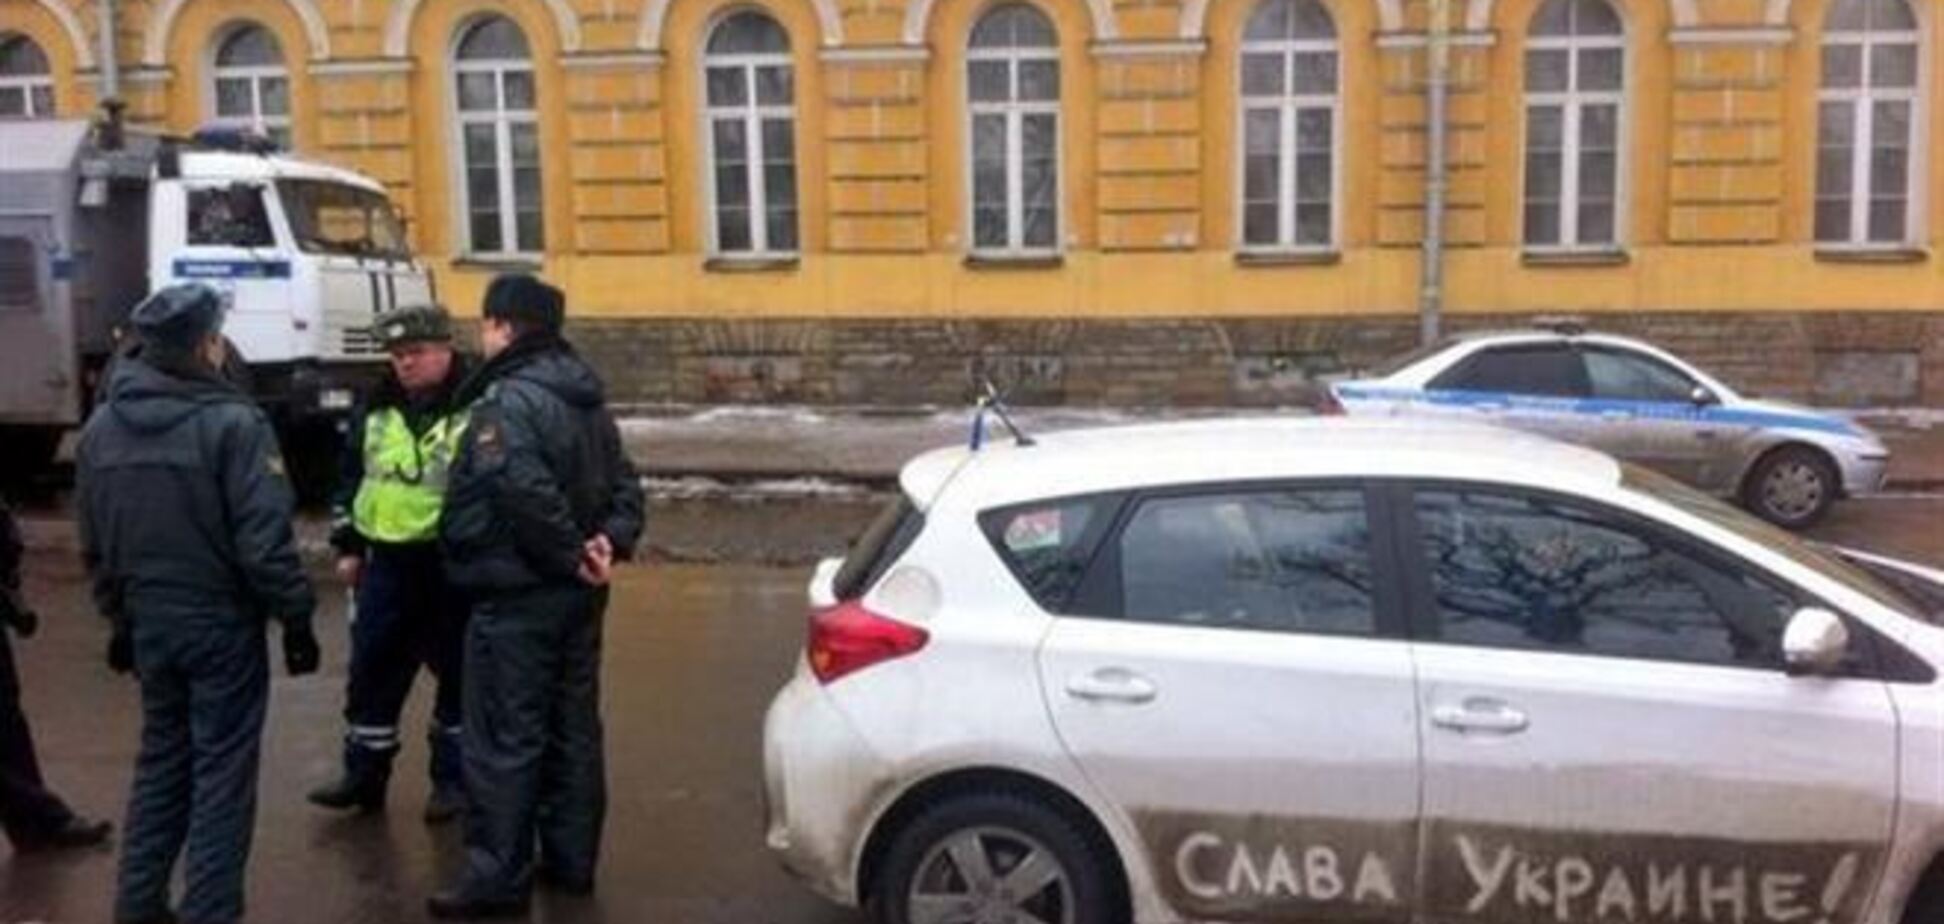 В России водитель креативно поддержал Евромайдан